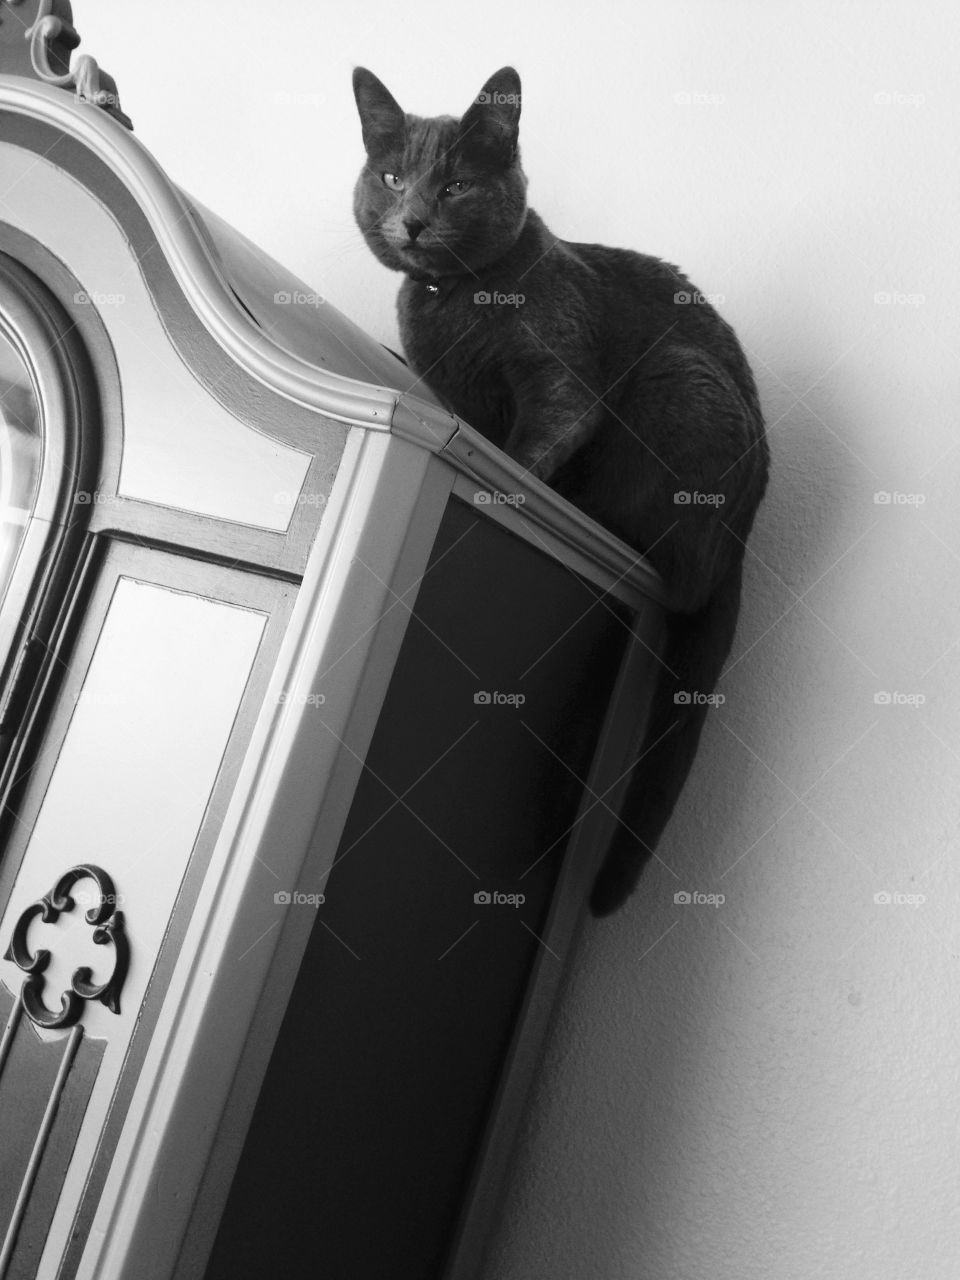 Cat up high